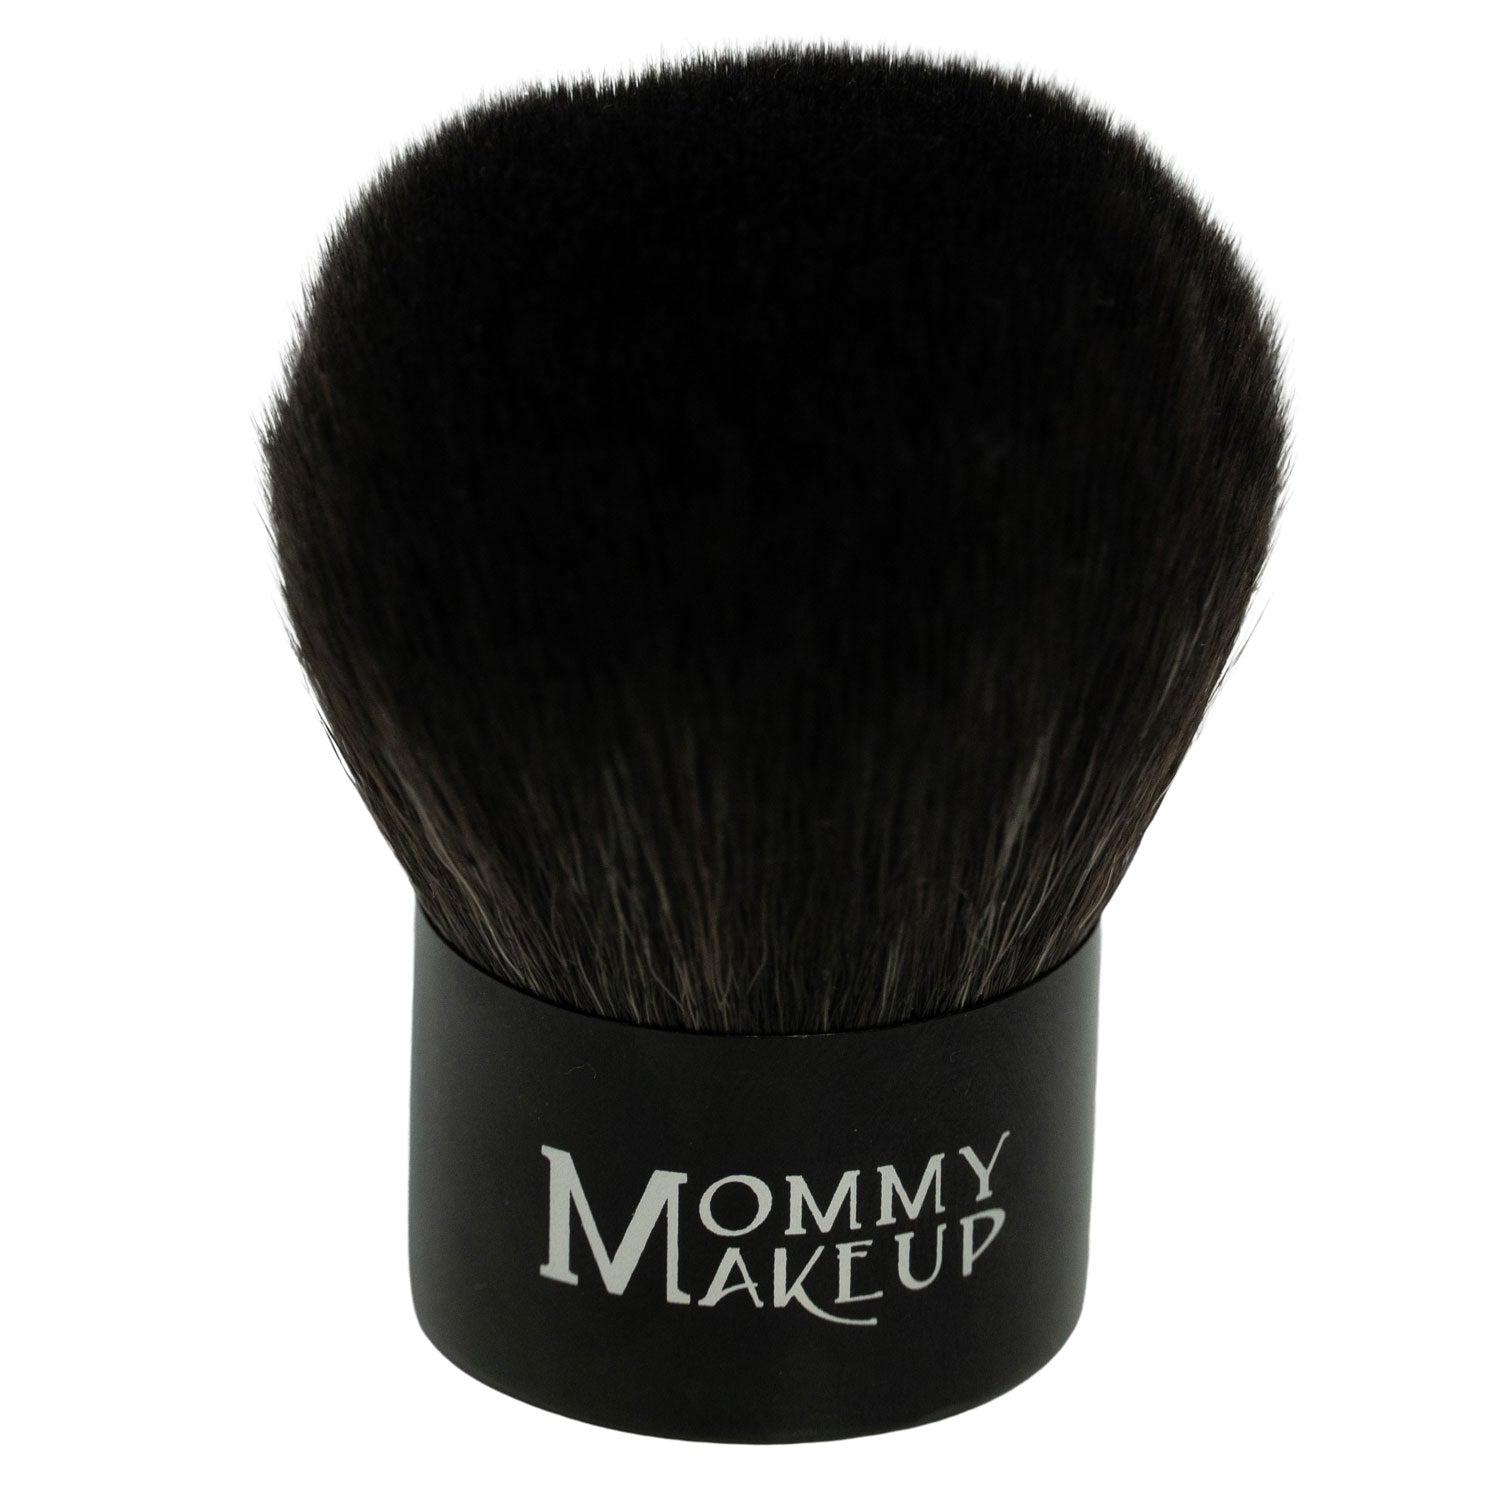 Mommy Makeup Kabuki Brush with premium synthetic (vegan) bristles, hypoallergenic